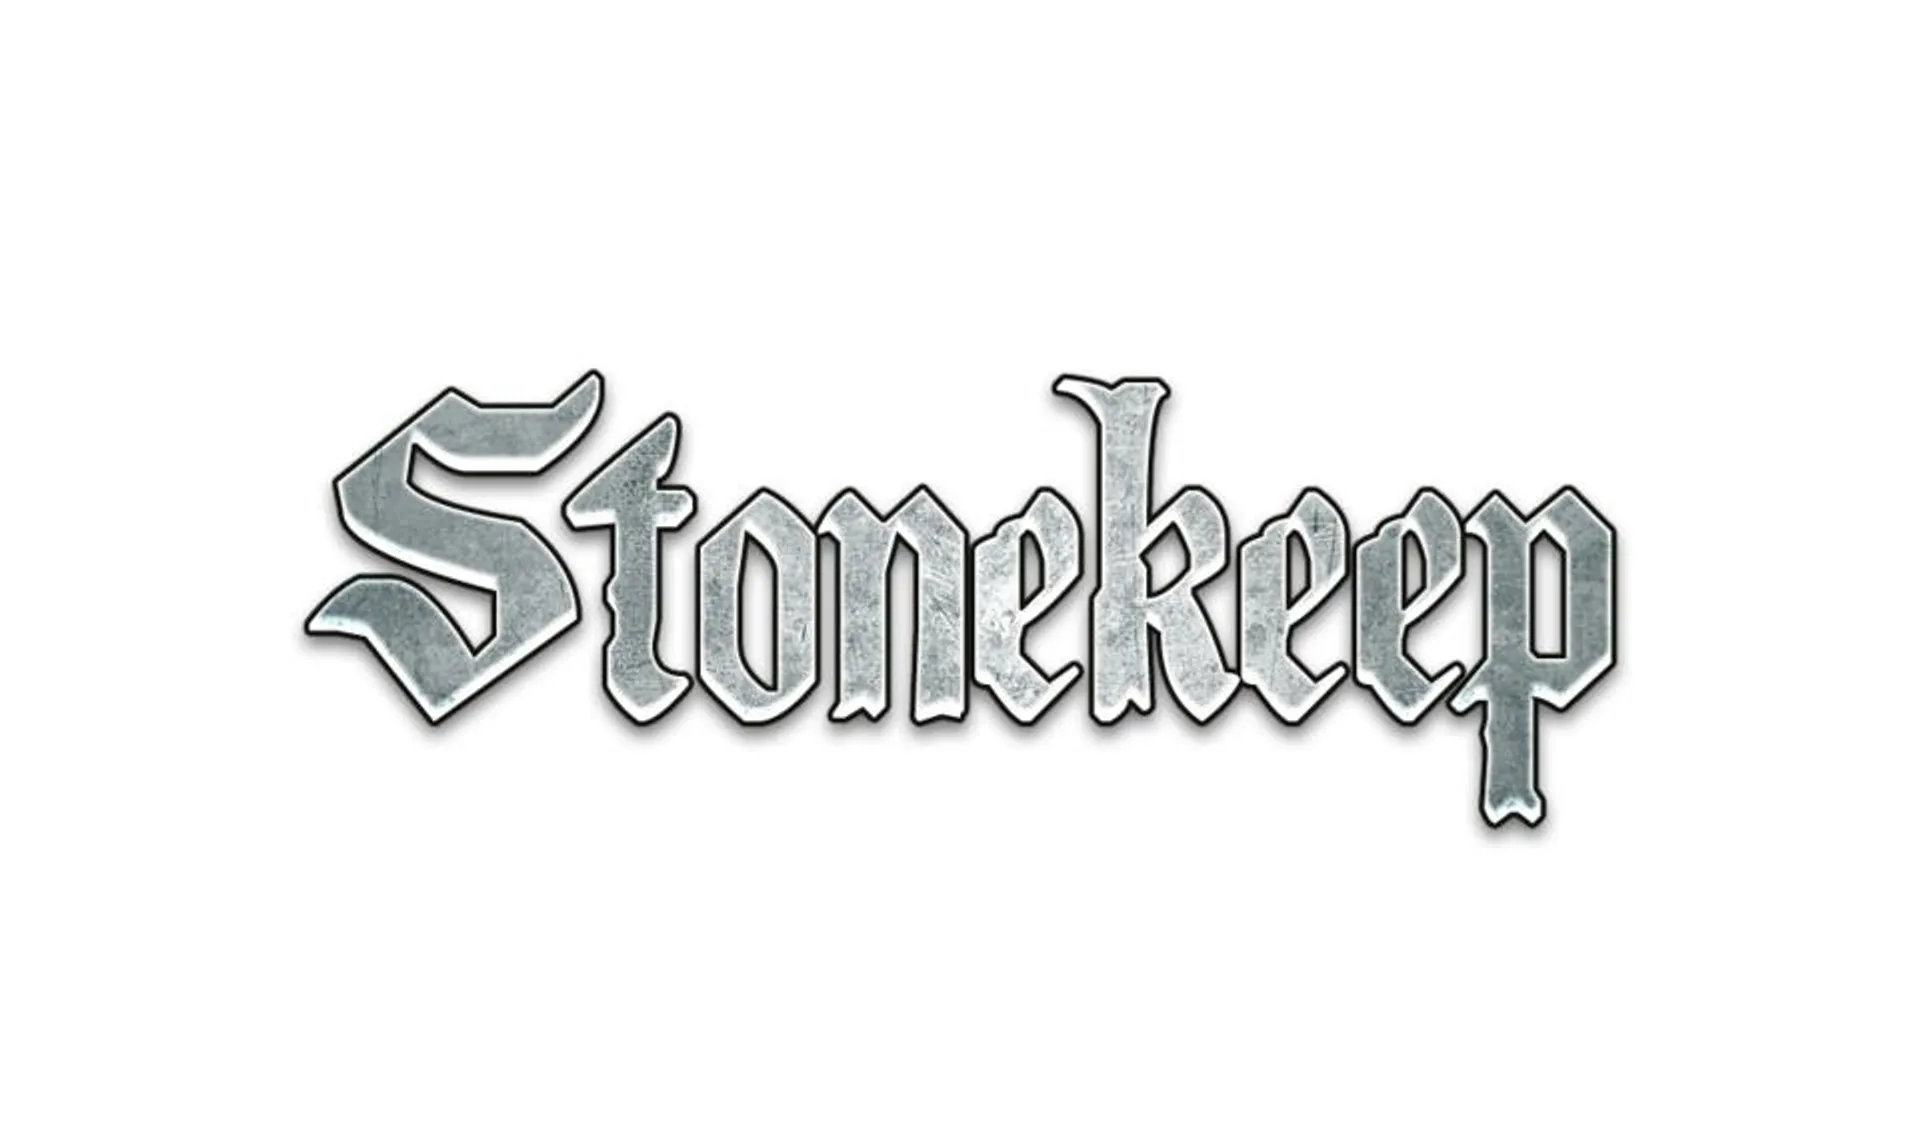 Stonekeep